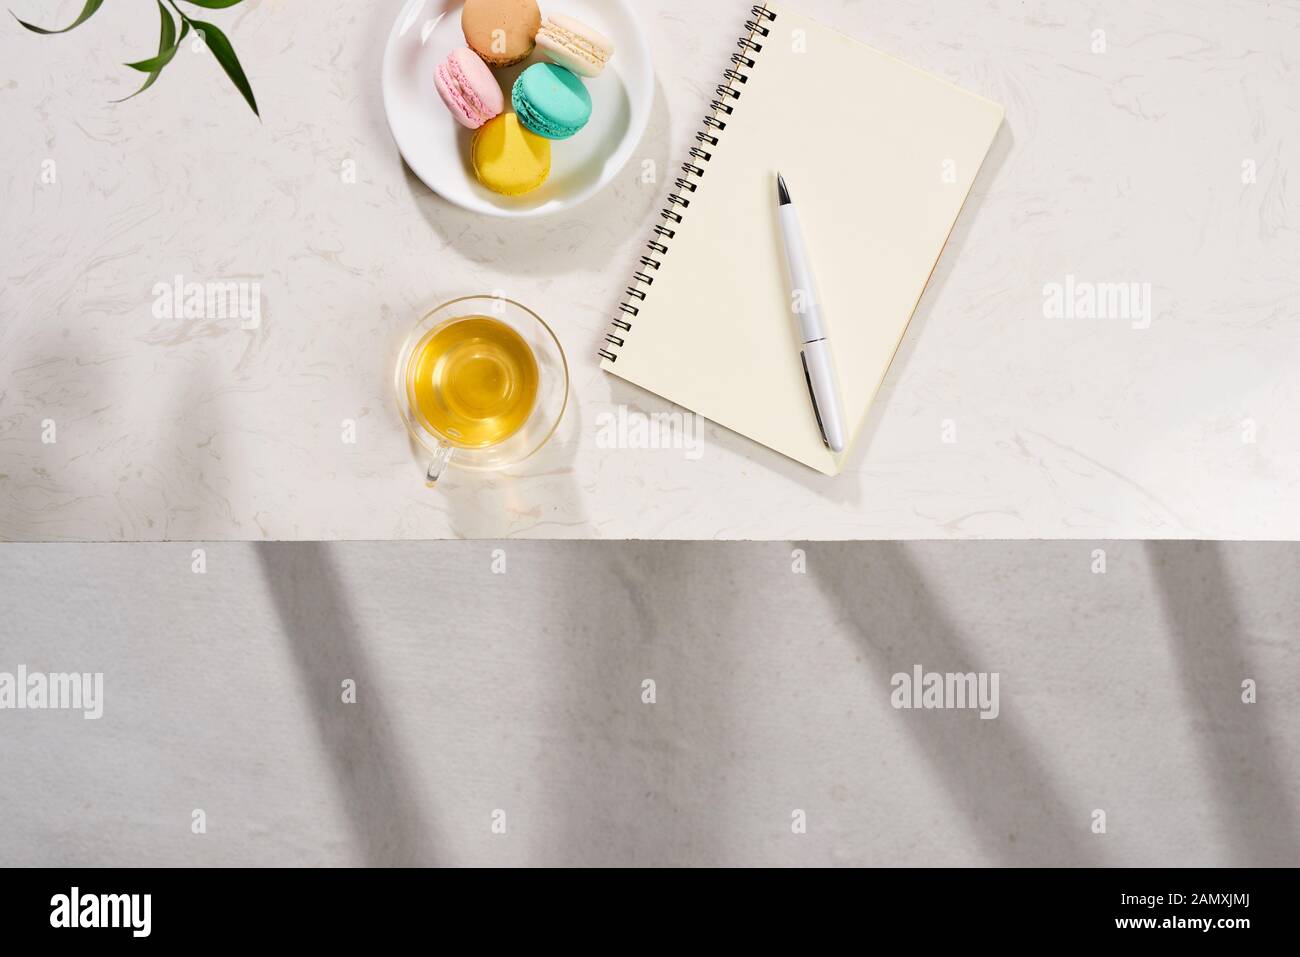 Top view of notebook, pen, cake macaron and tea mug on white background. Flatlay. Stock Photo